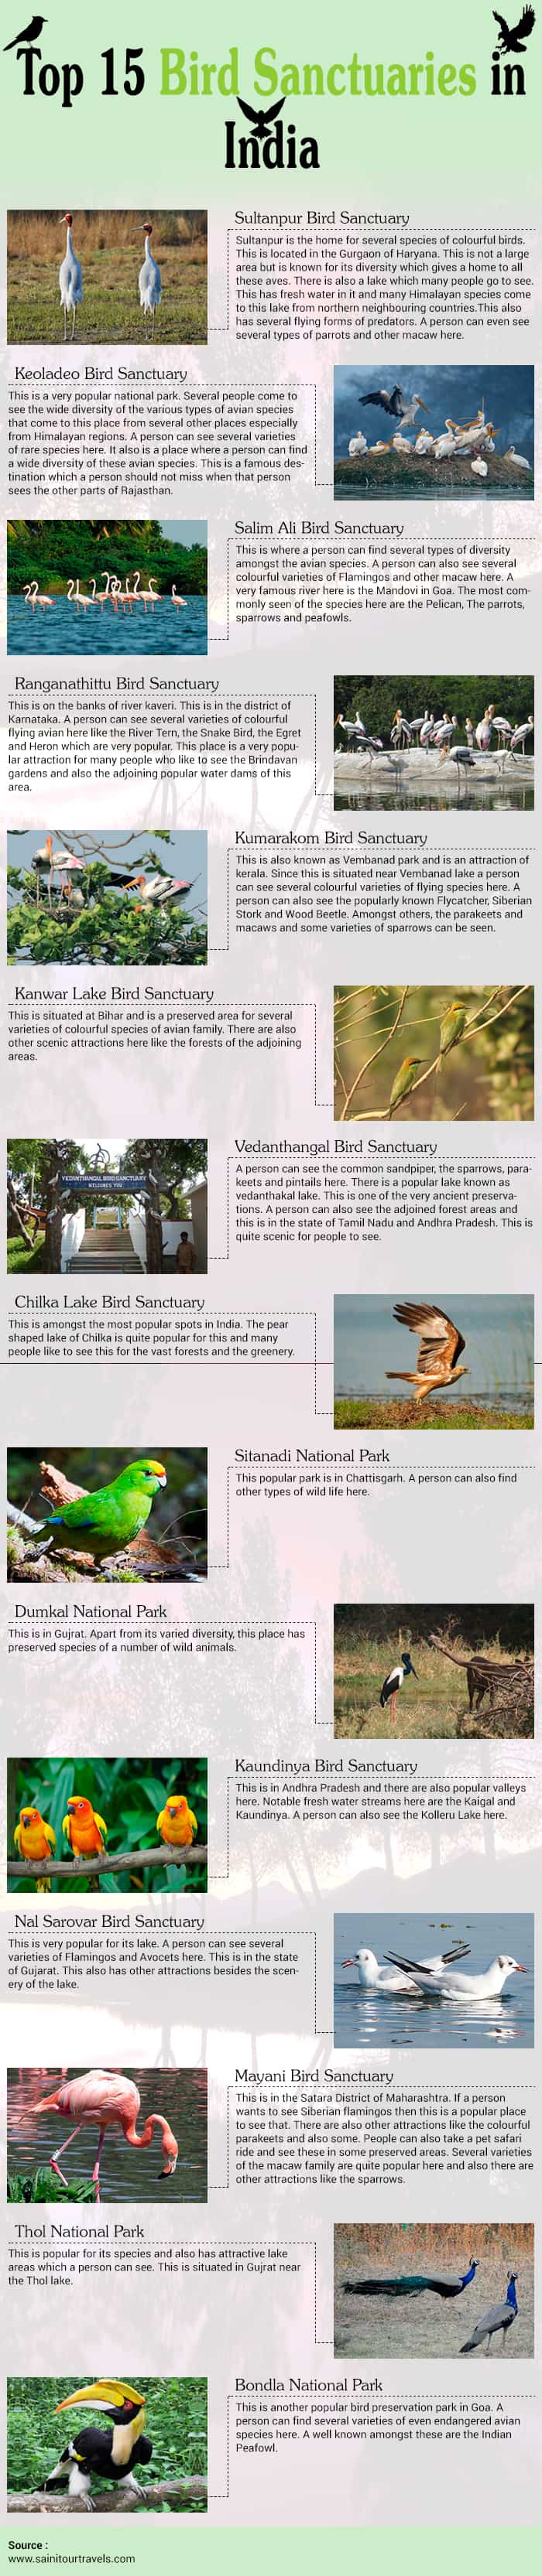 Top 15 Bird Sanctuaries in India